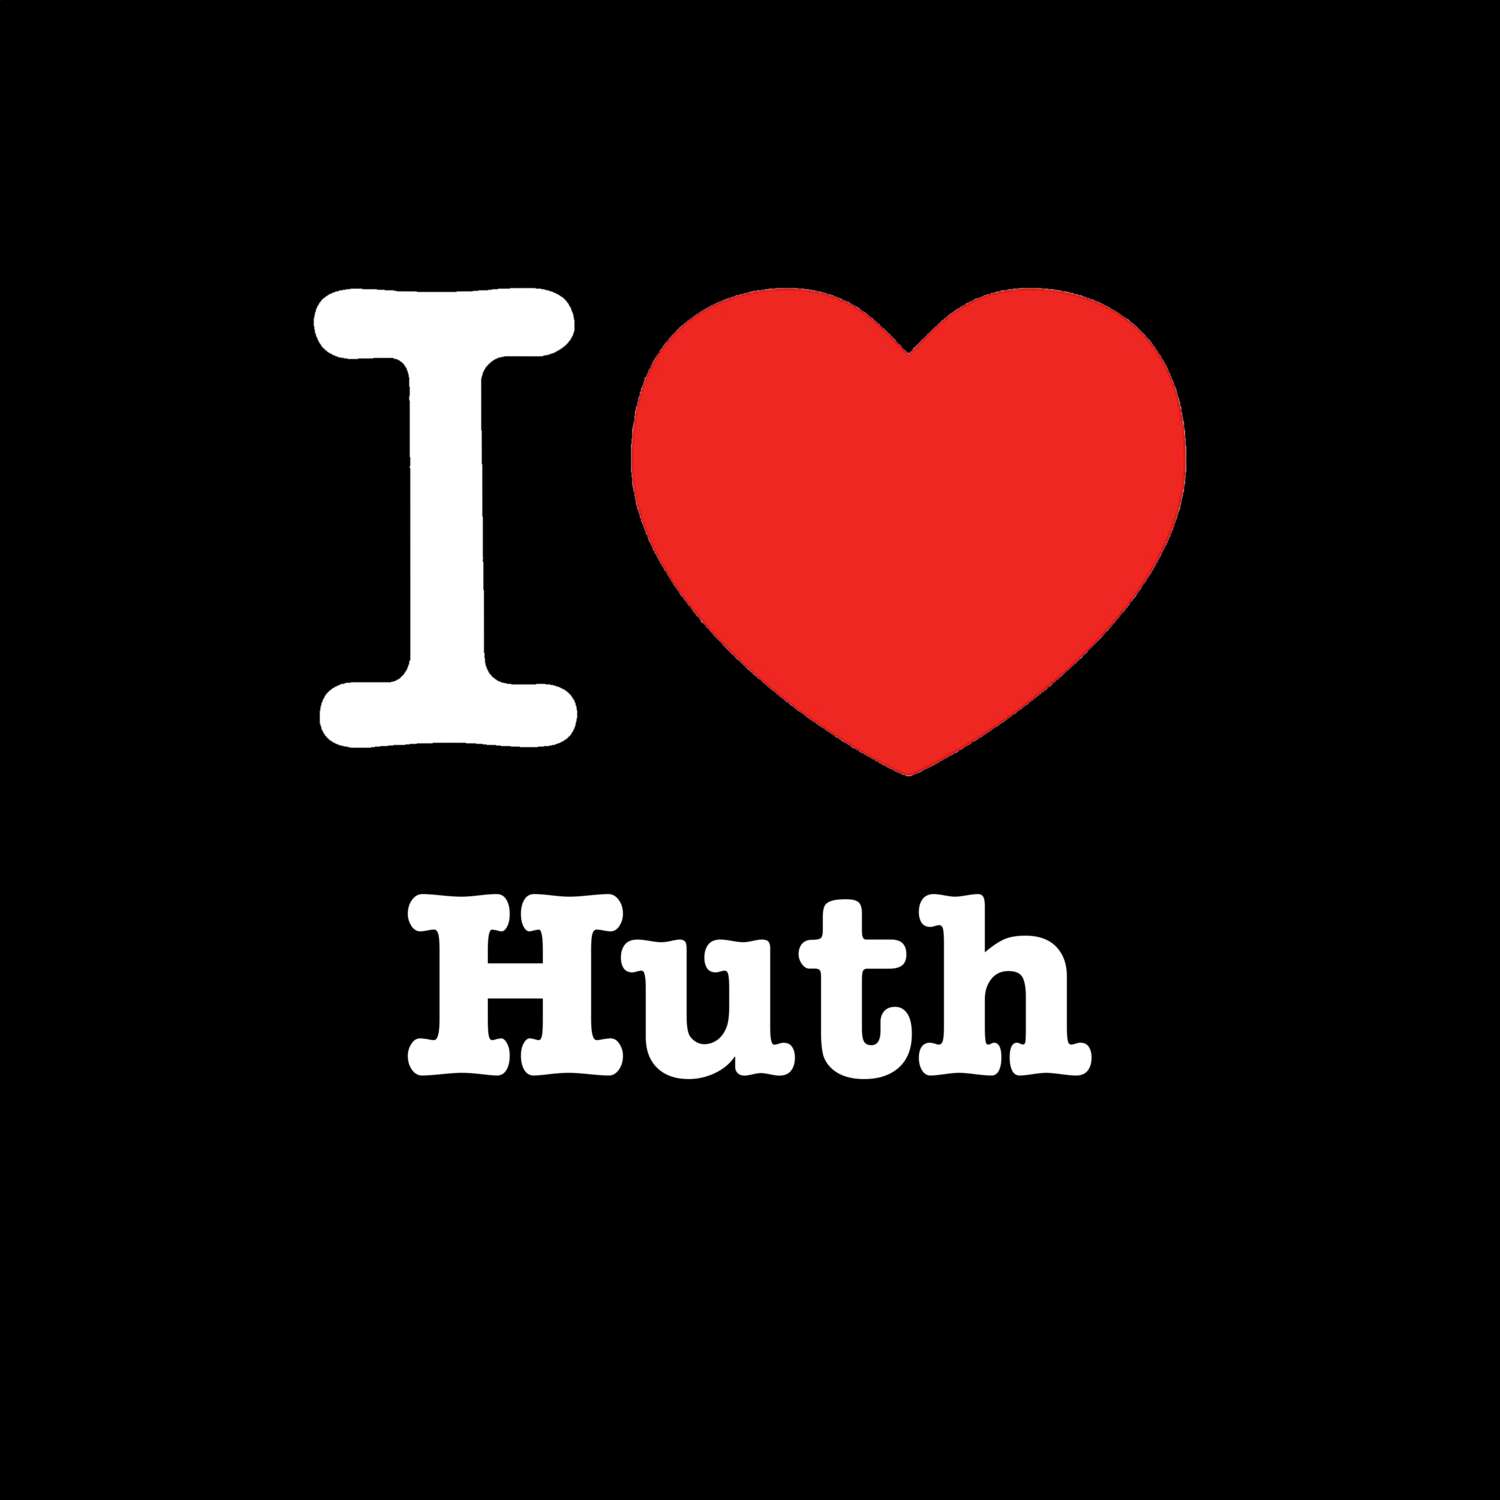 Huth T-Shirt »I love«